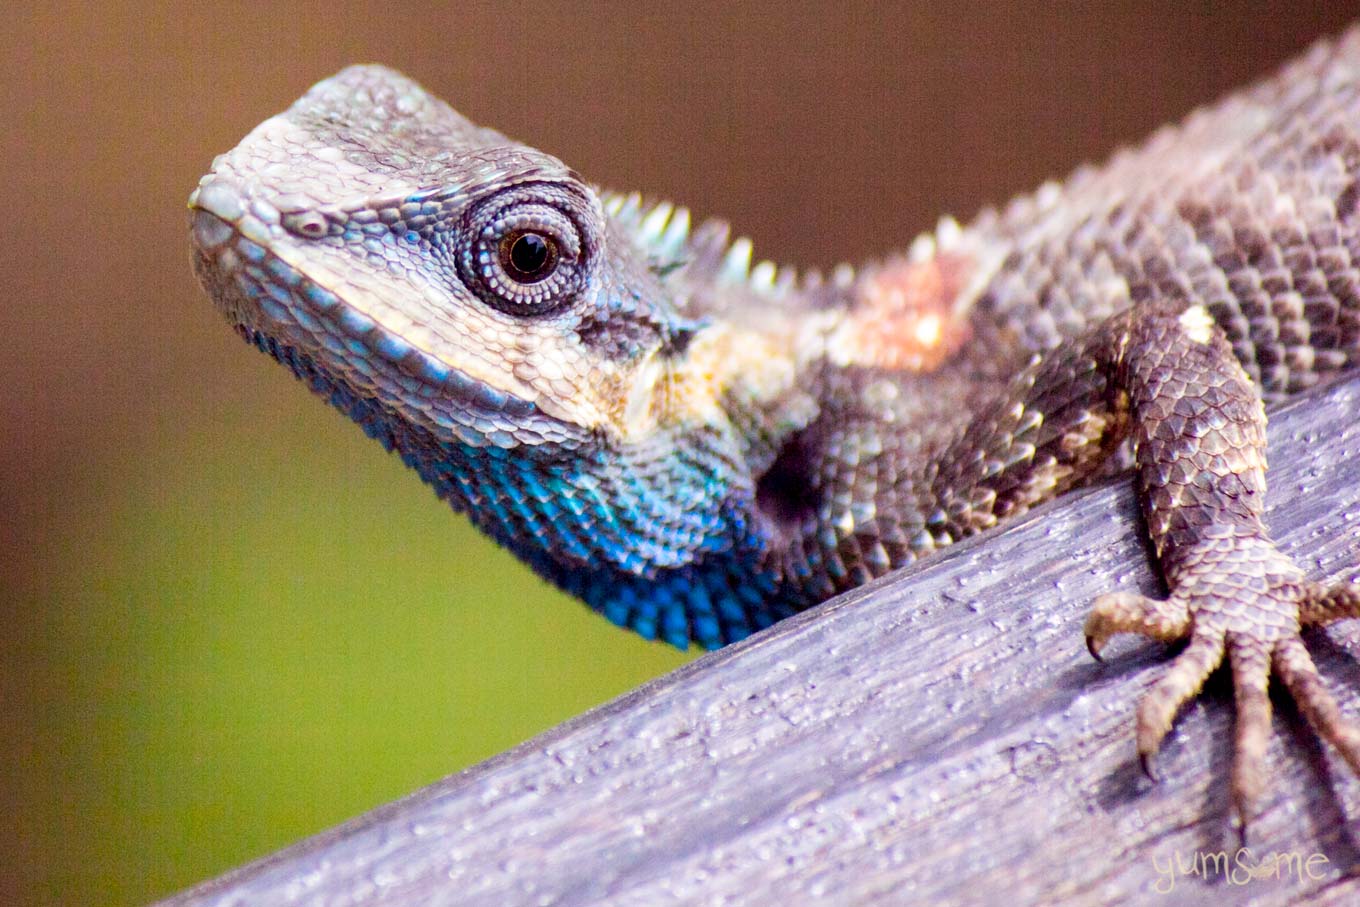 Closeup of a blue crested dragon.